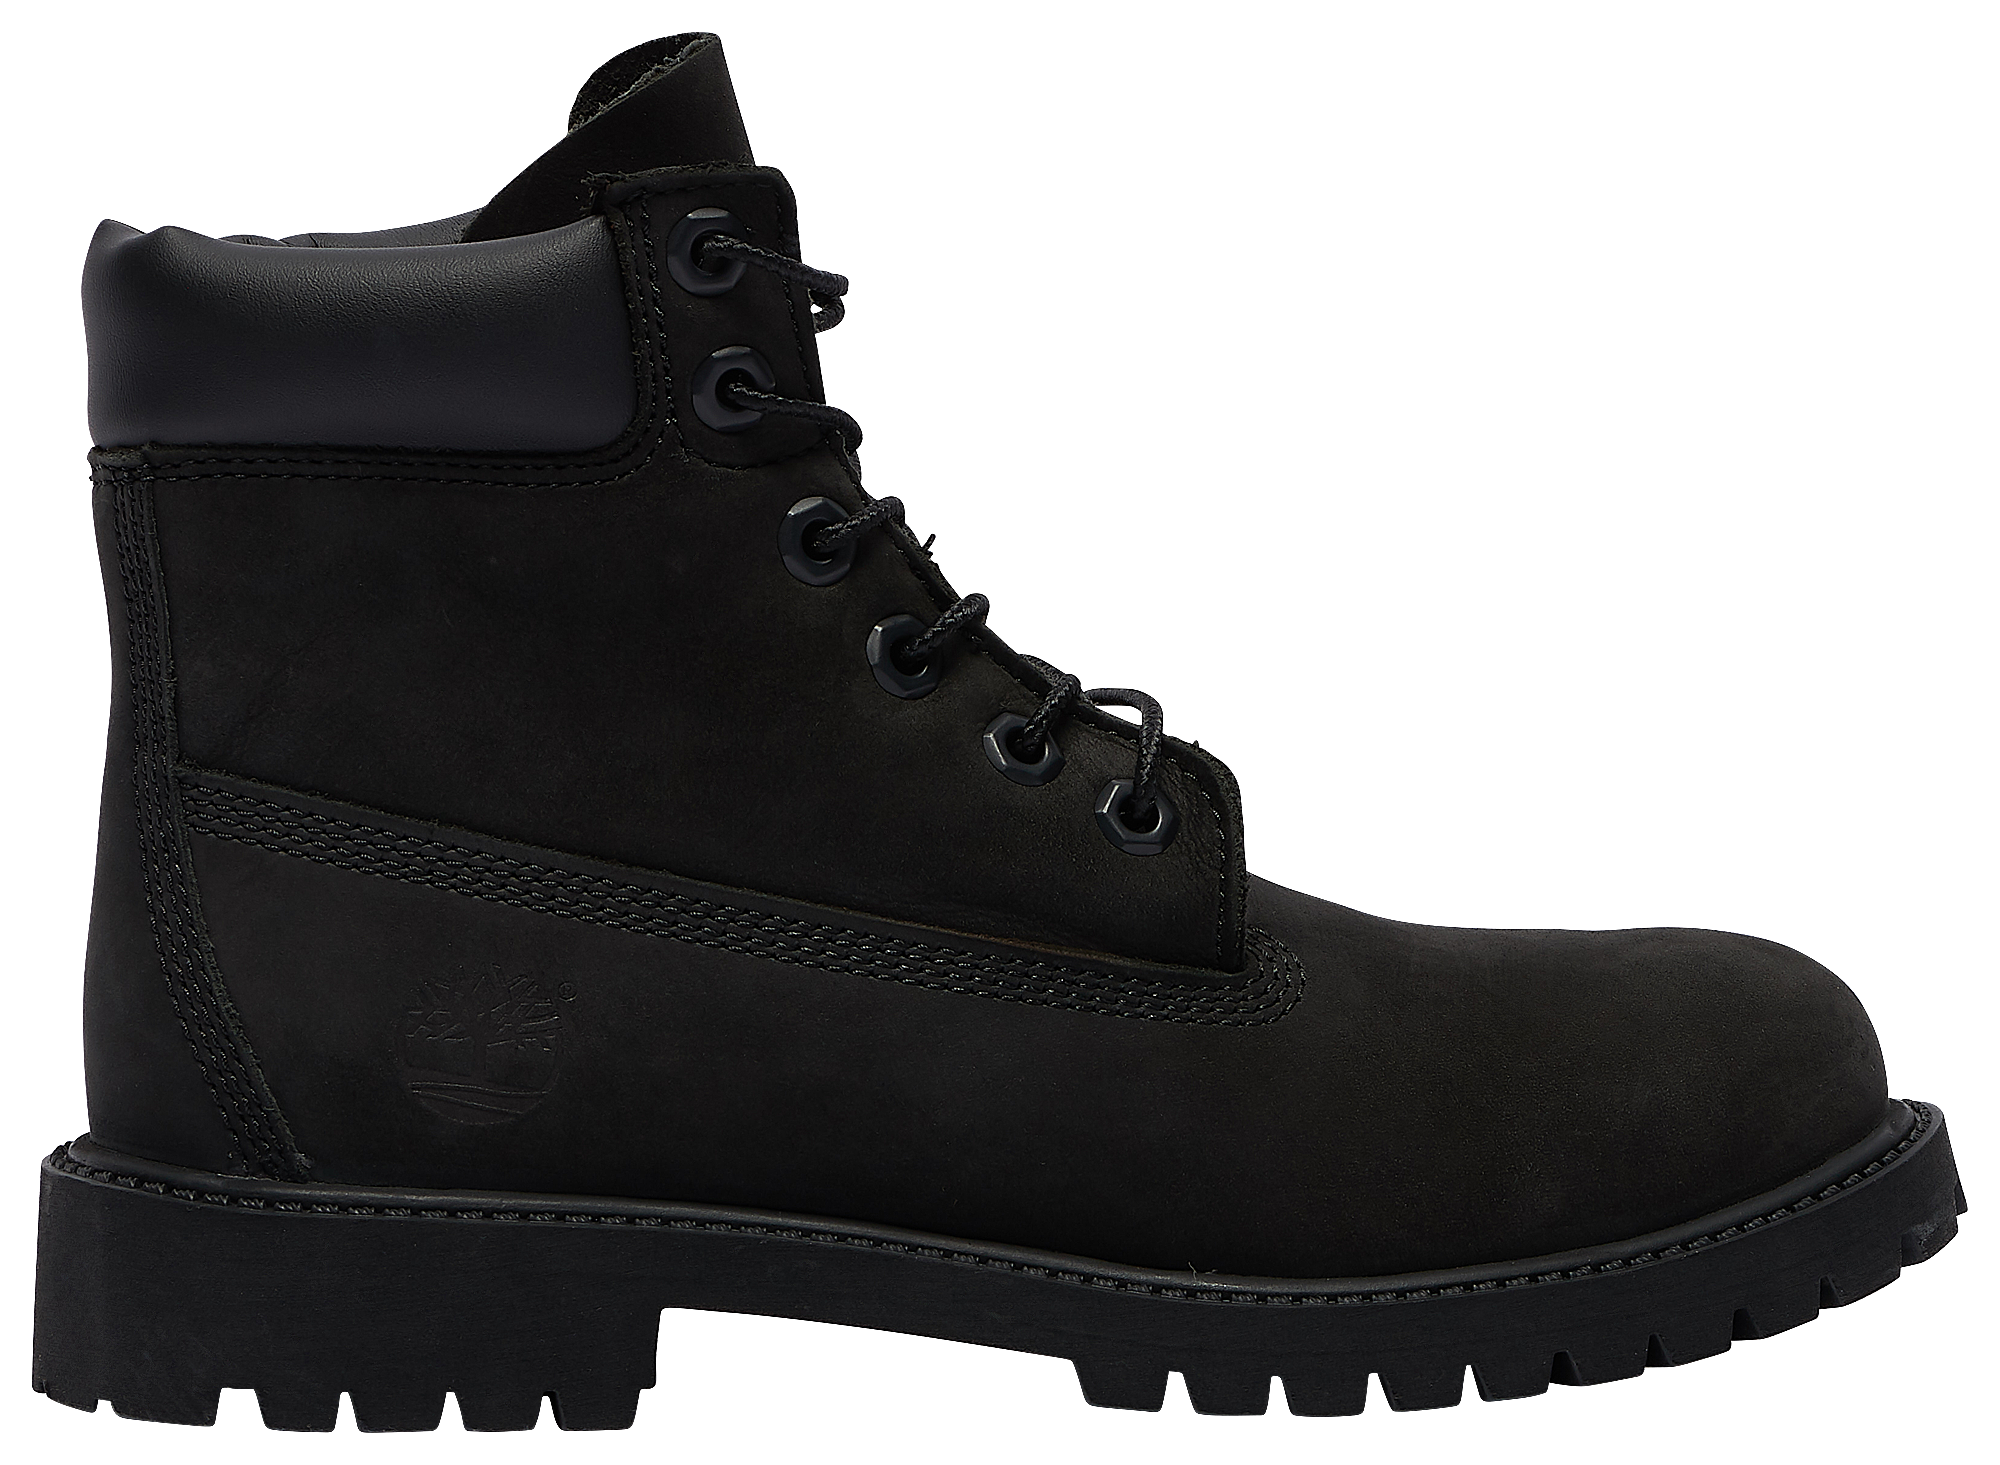 black timberland boots grade school size 7